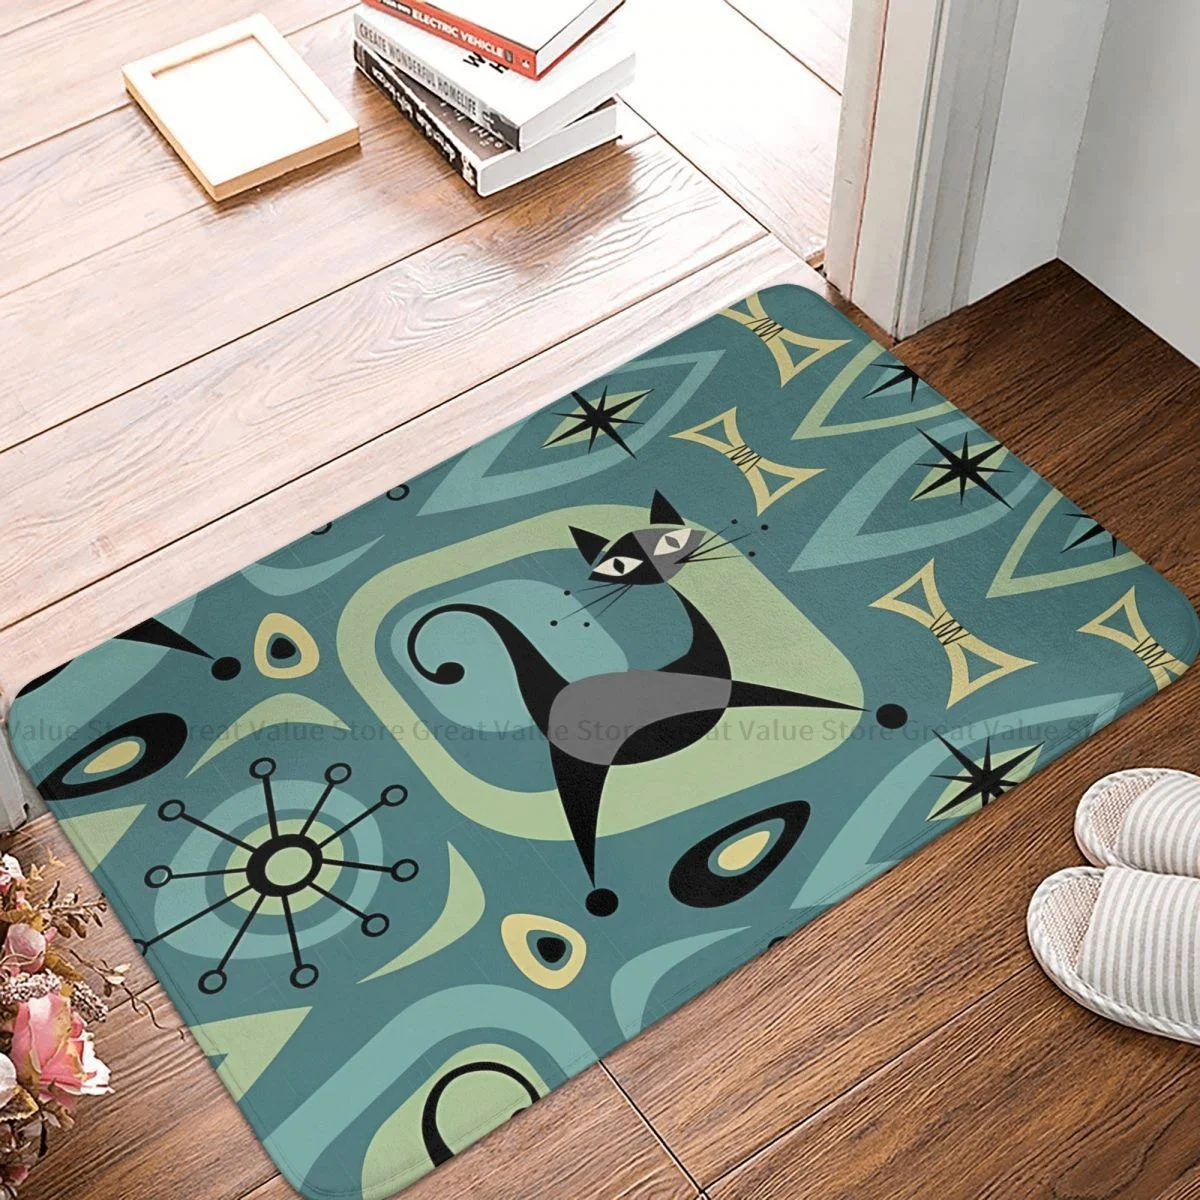 

Mid Century Meow Black Cat Animal Bathroom Non-Slip Carpet Funny Living Room Mat Welcome Doormat Floor Decor Rug